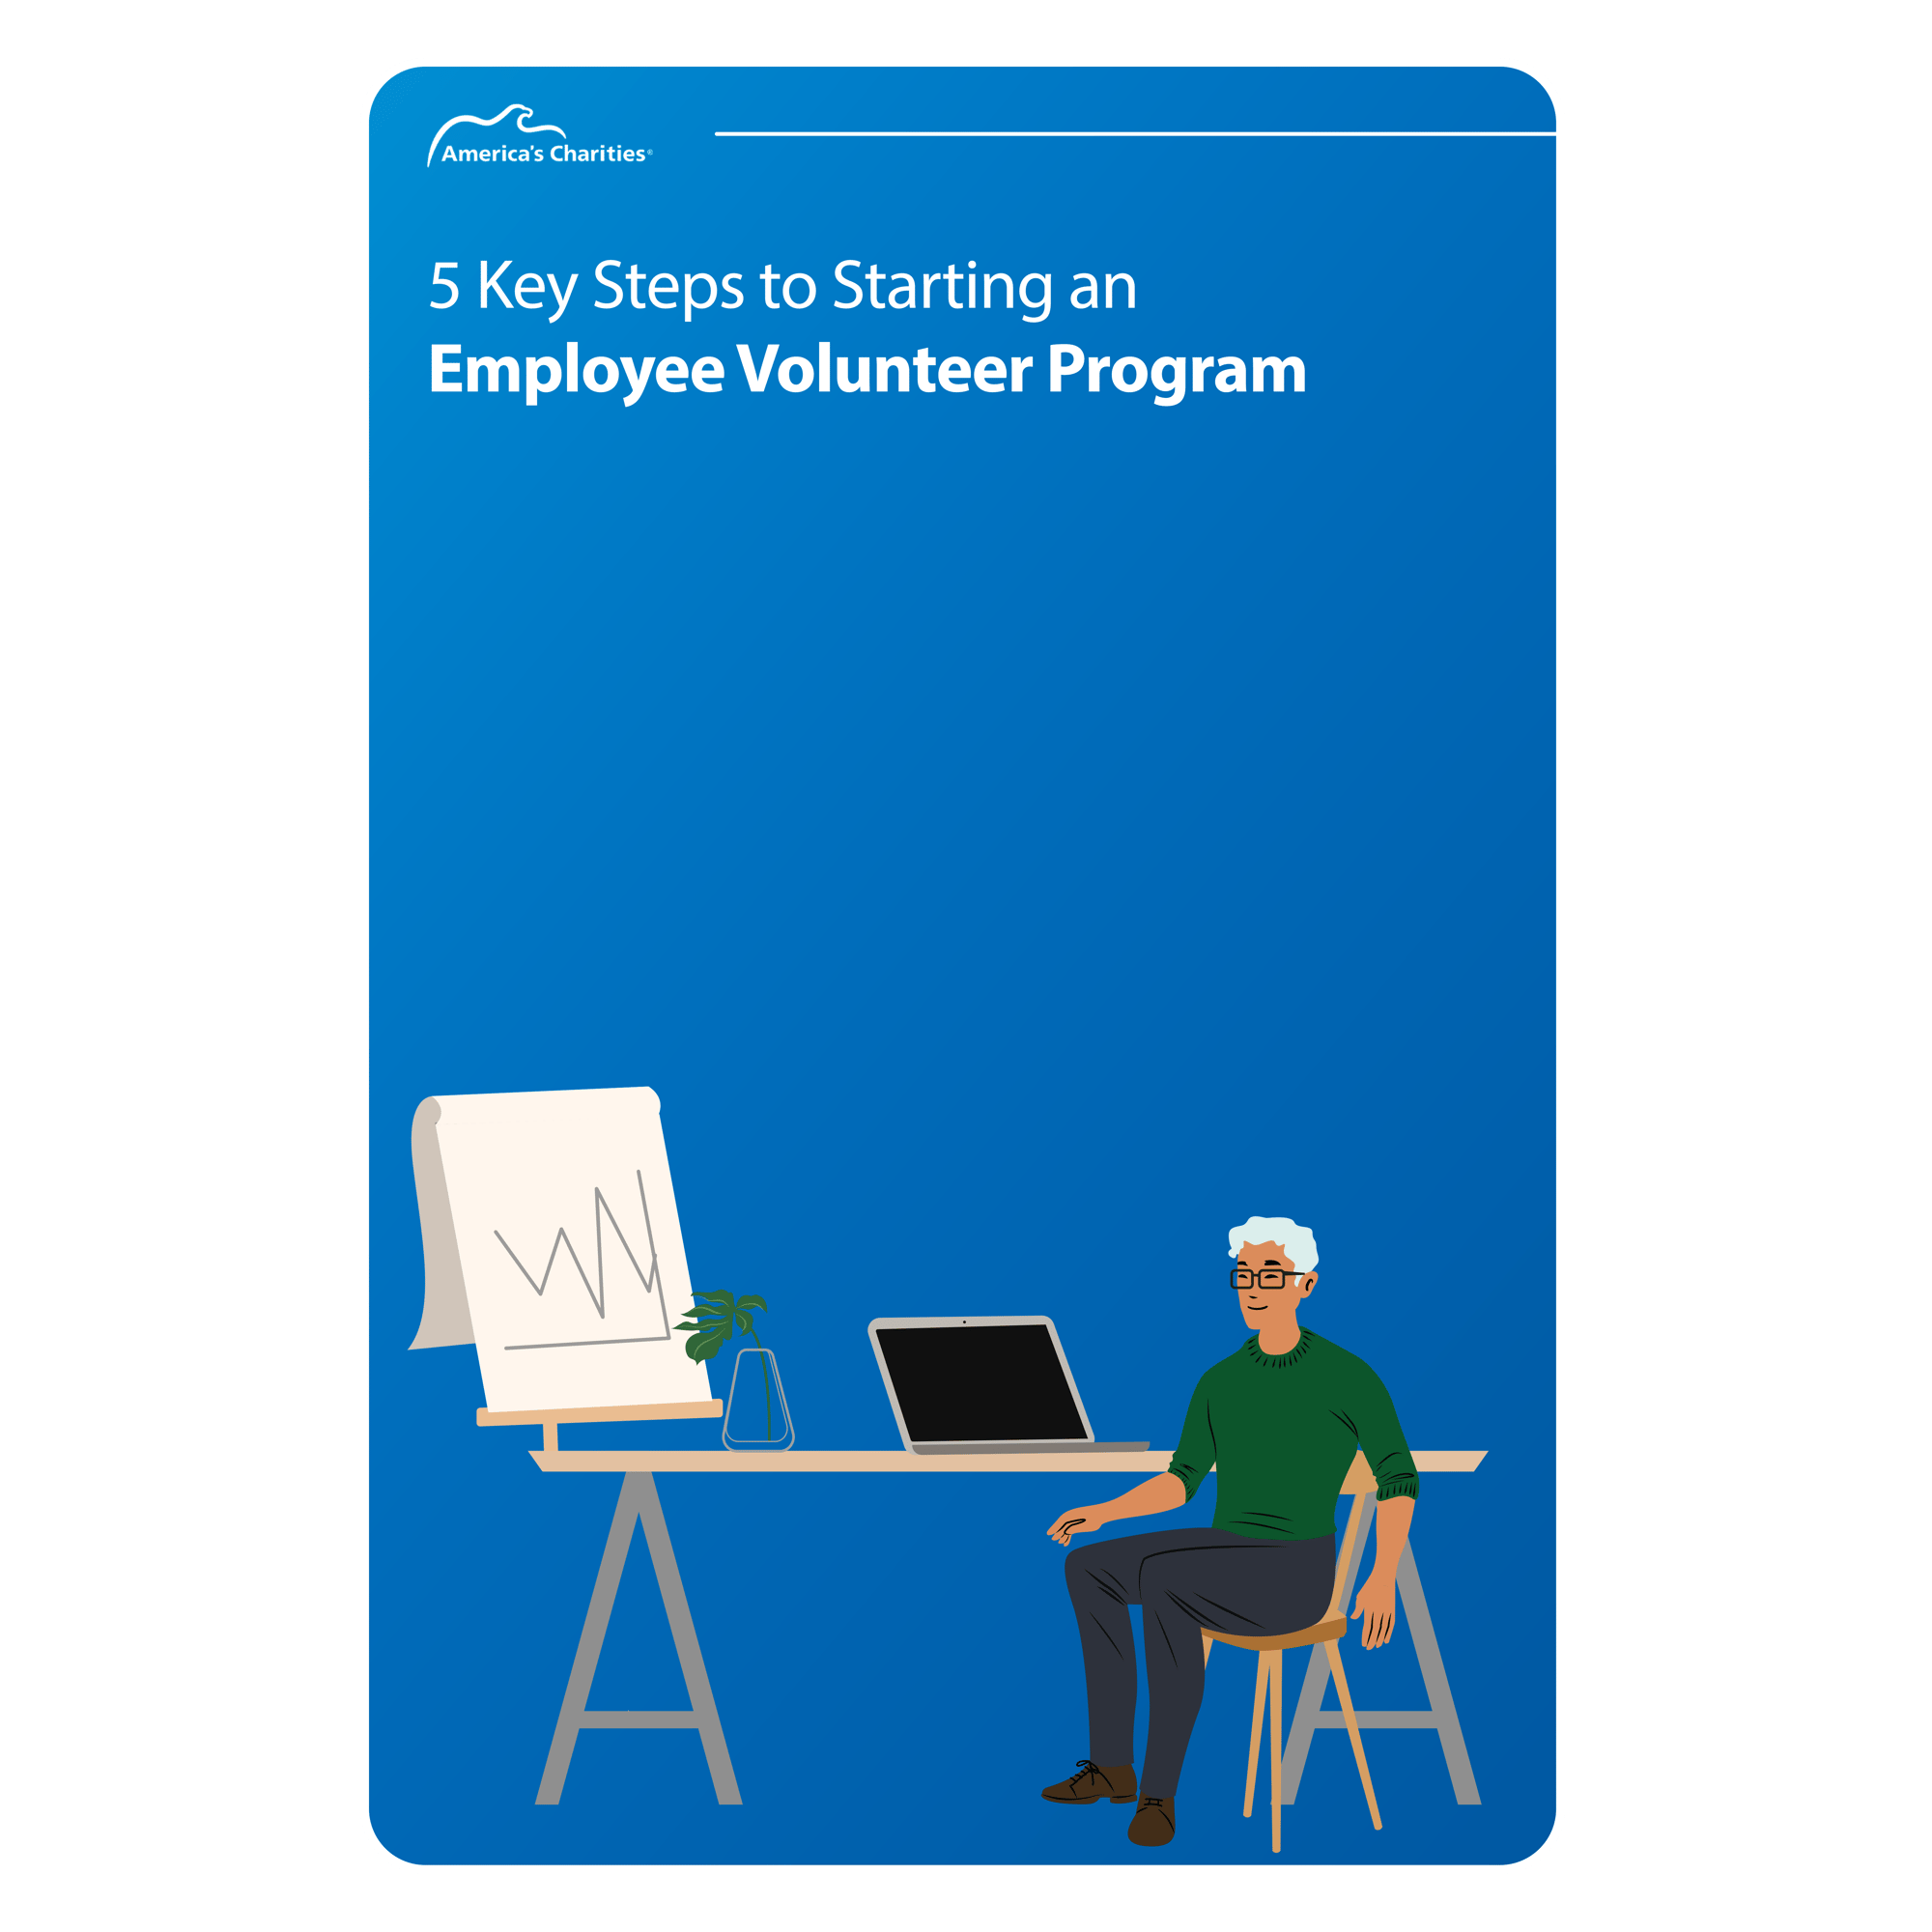 5 Key Steps to Starting an Employee Volunteer Program